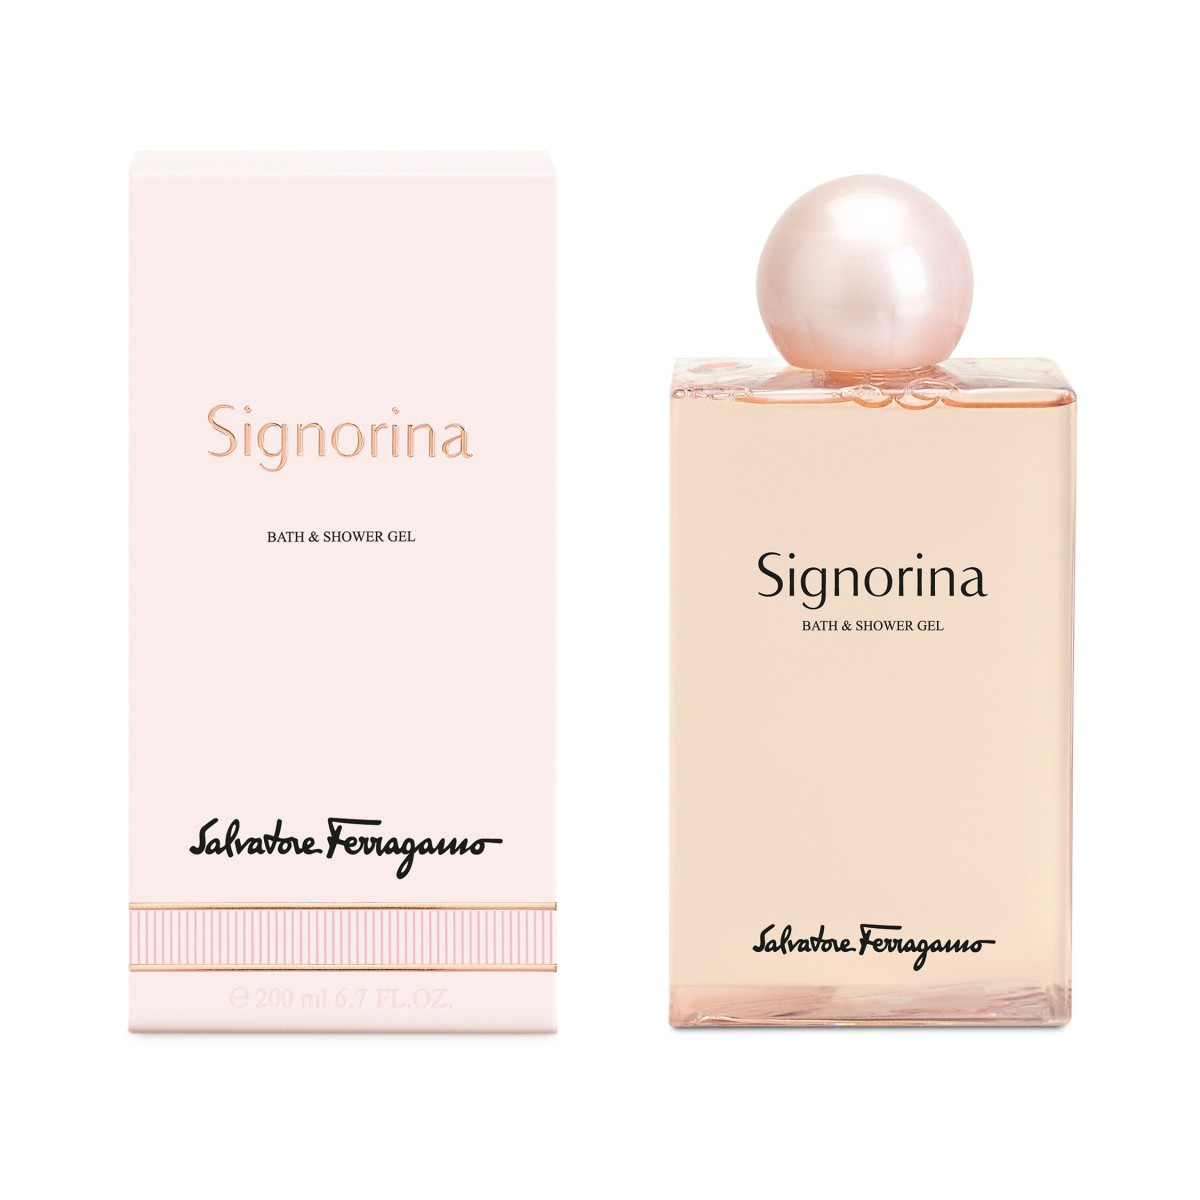 Signorina Bath & Shower Gel